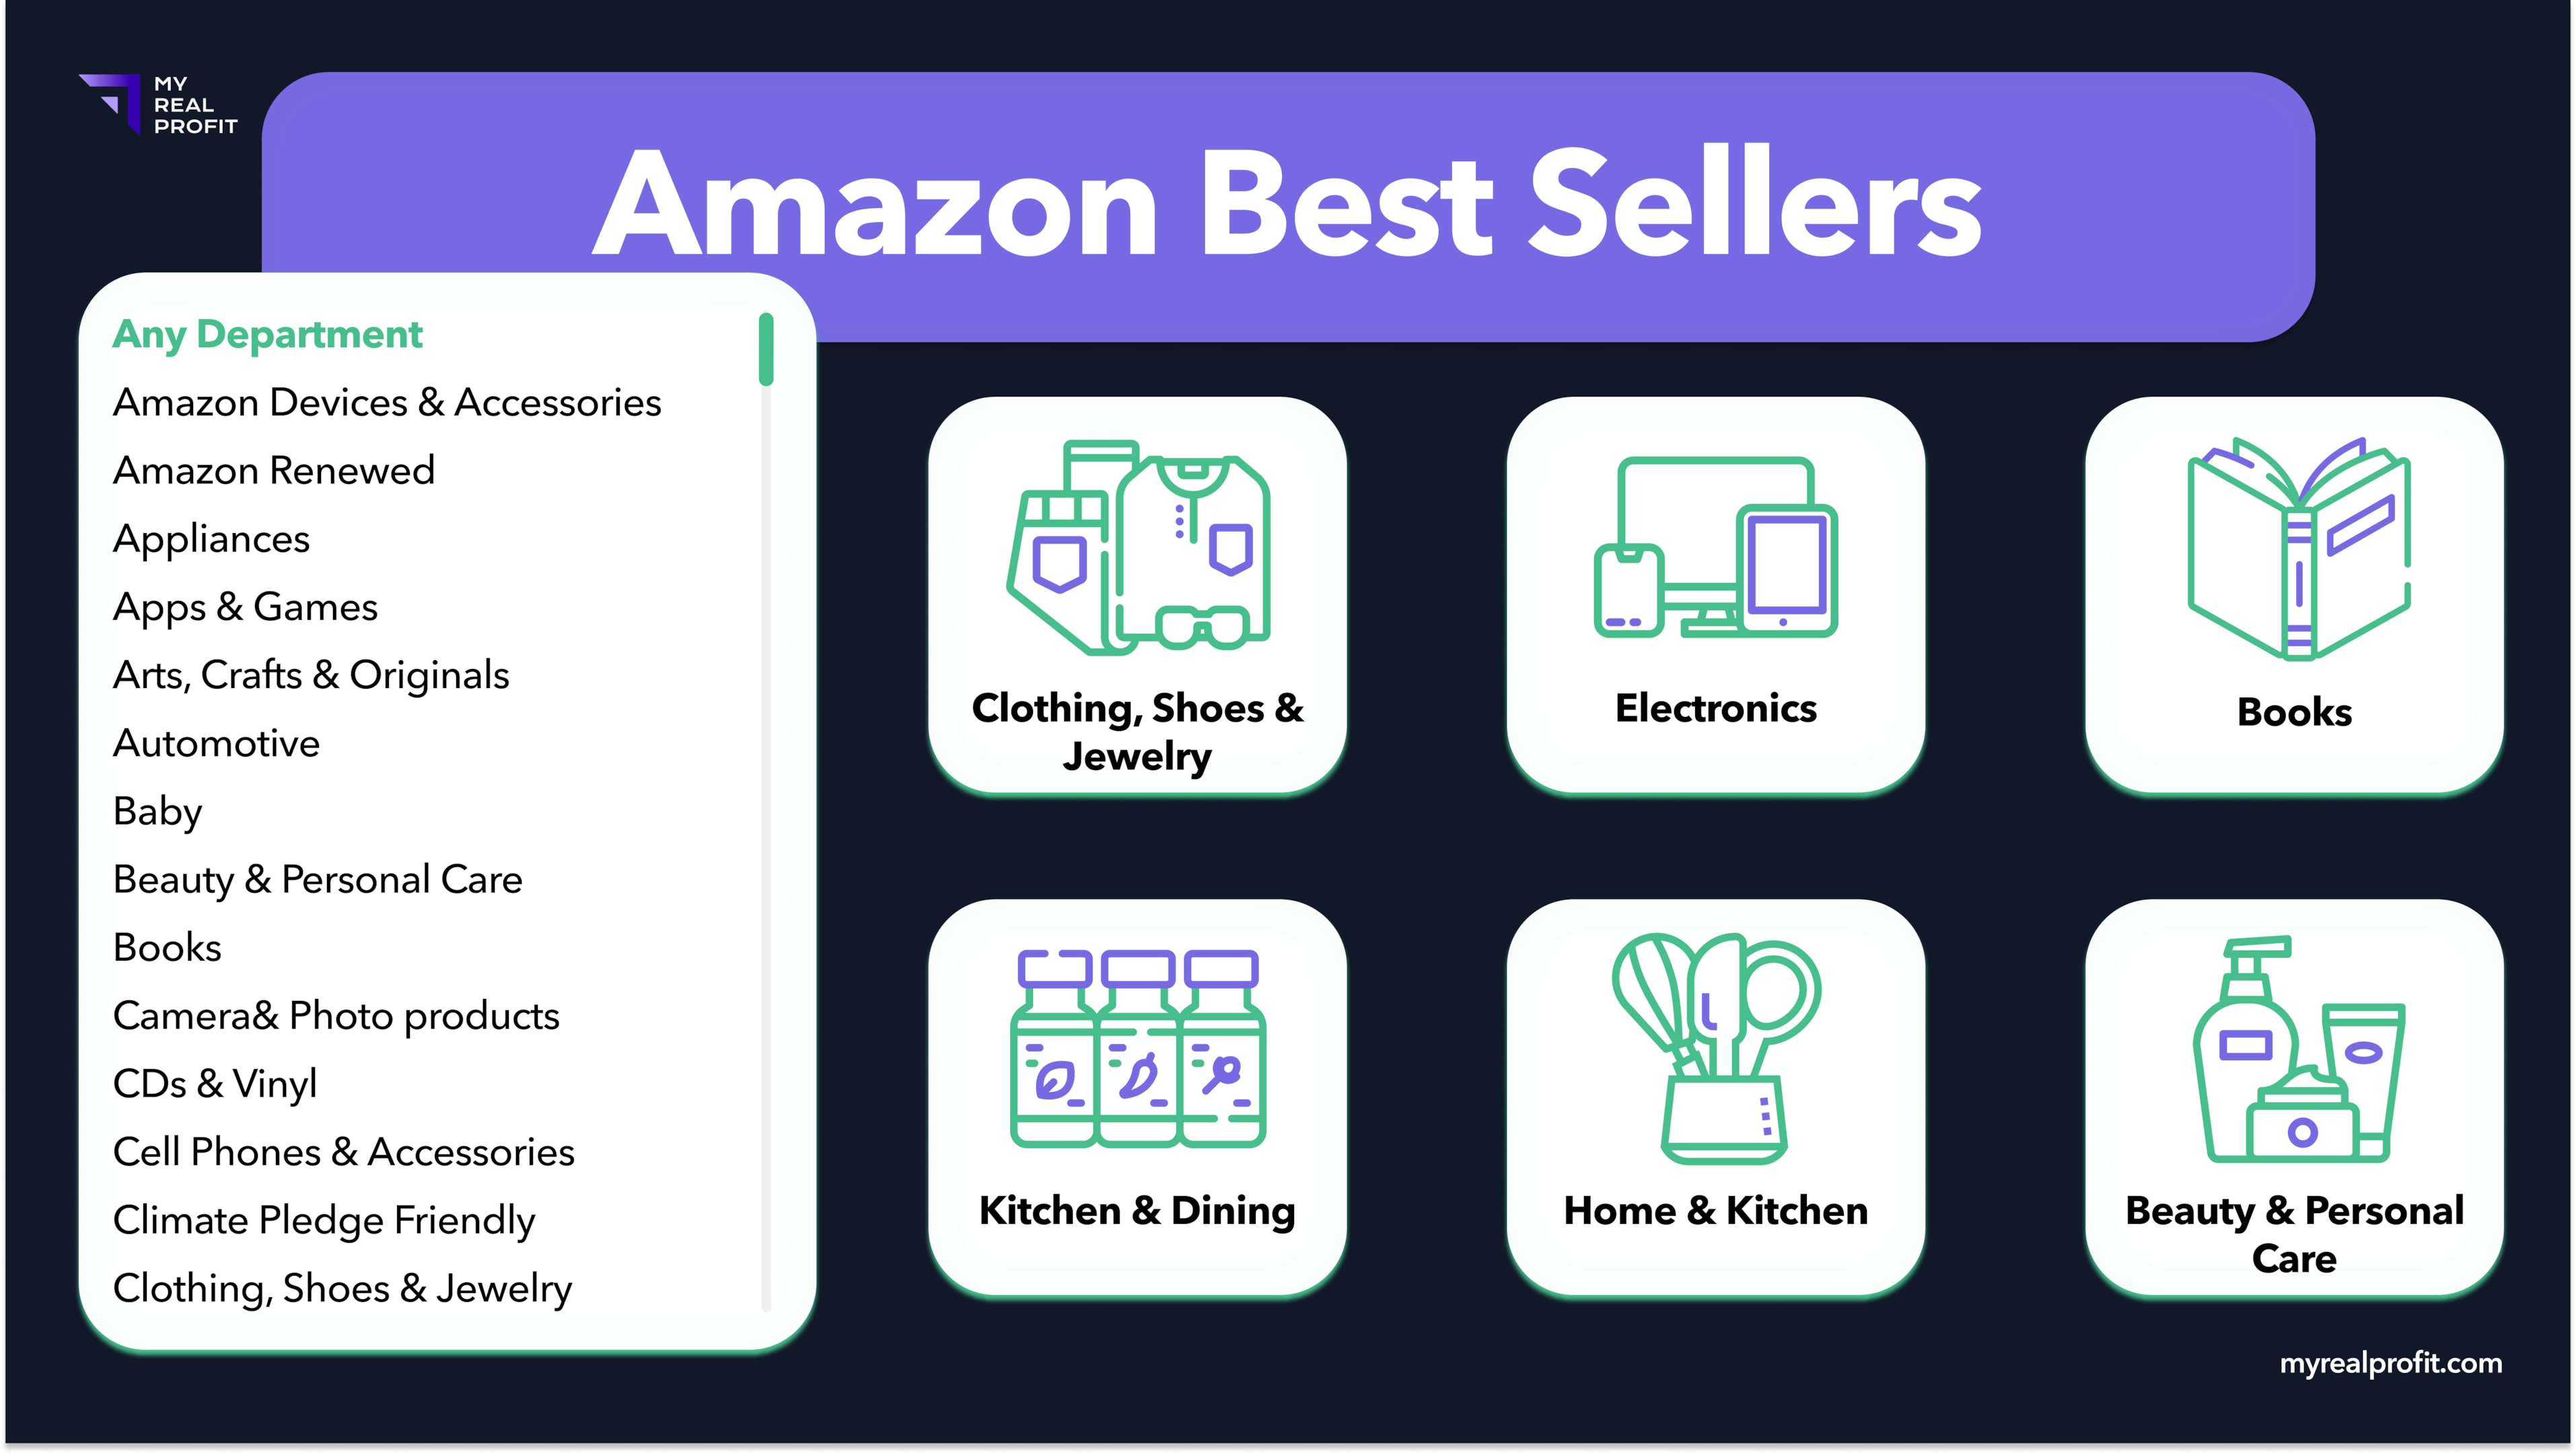 Amazon best selling categories